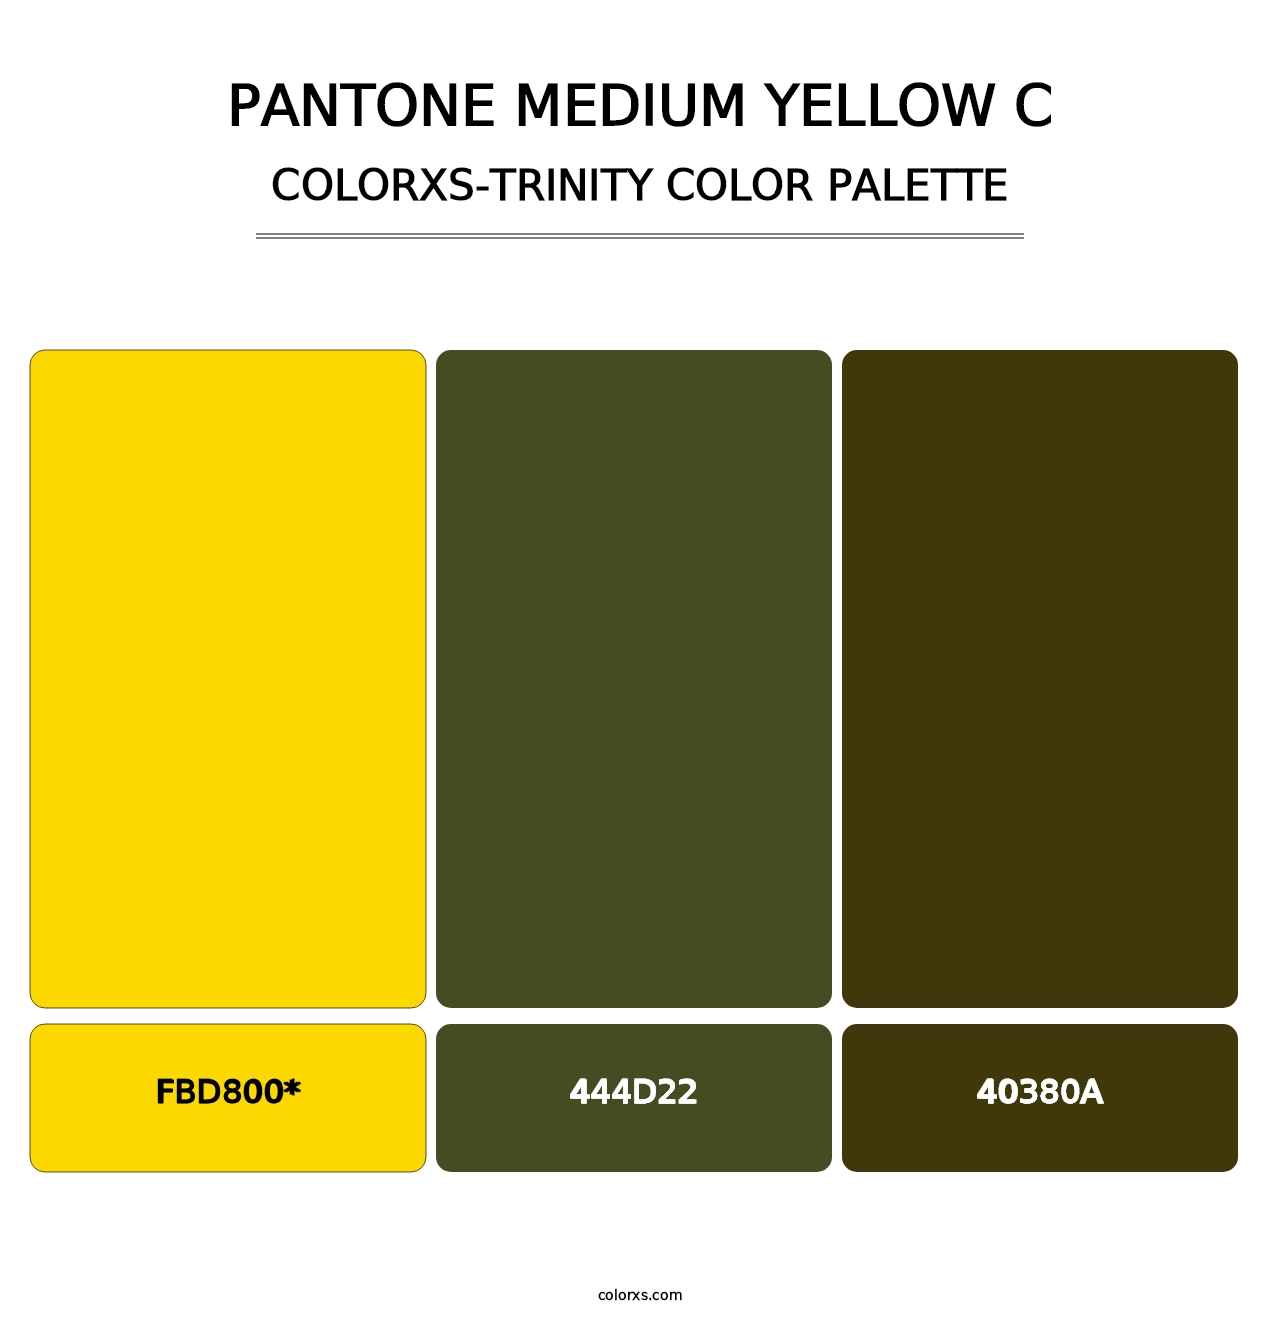 PANTONE Medium Yellow C - Colorxs Trinity Palette